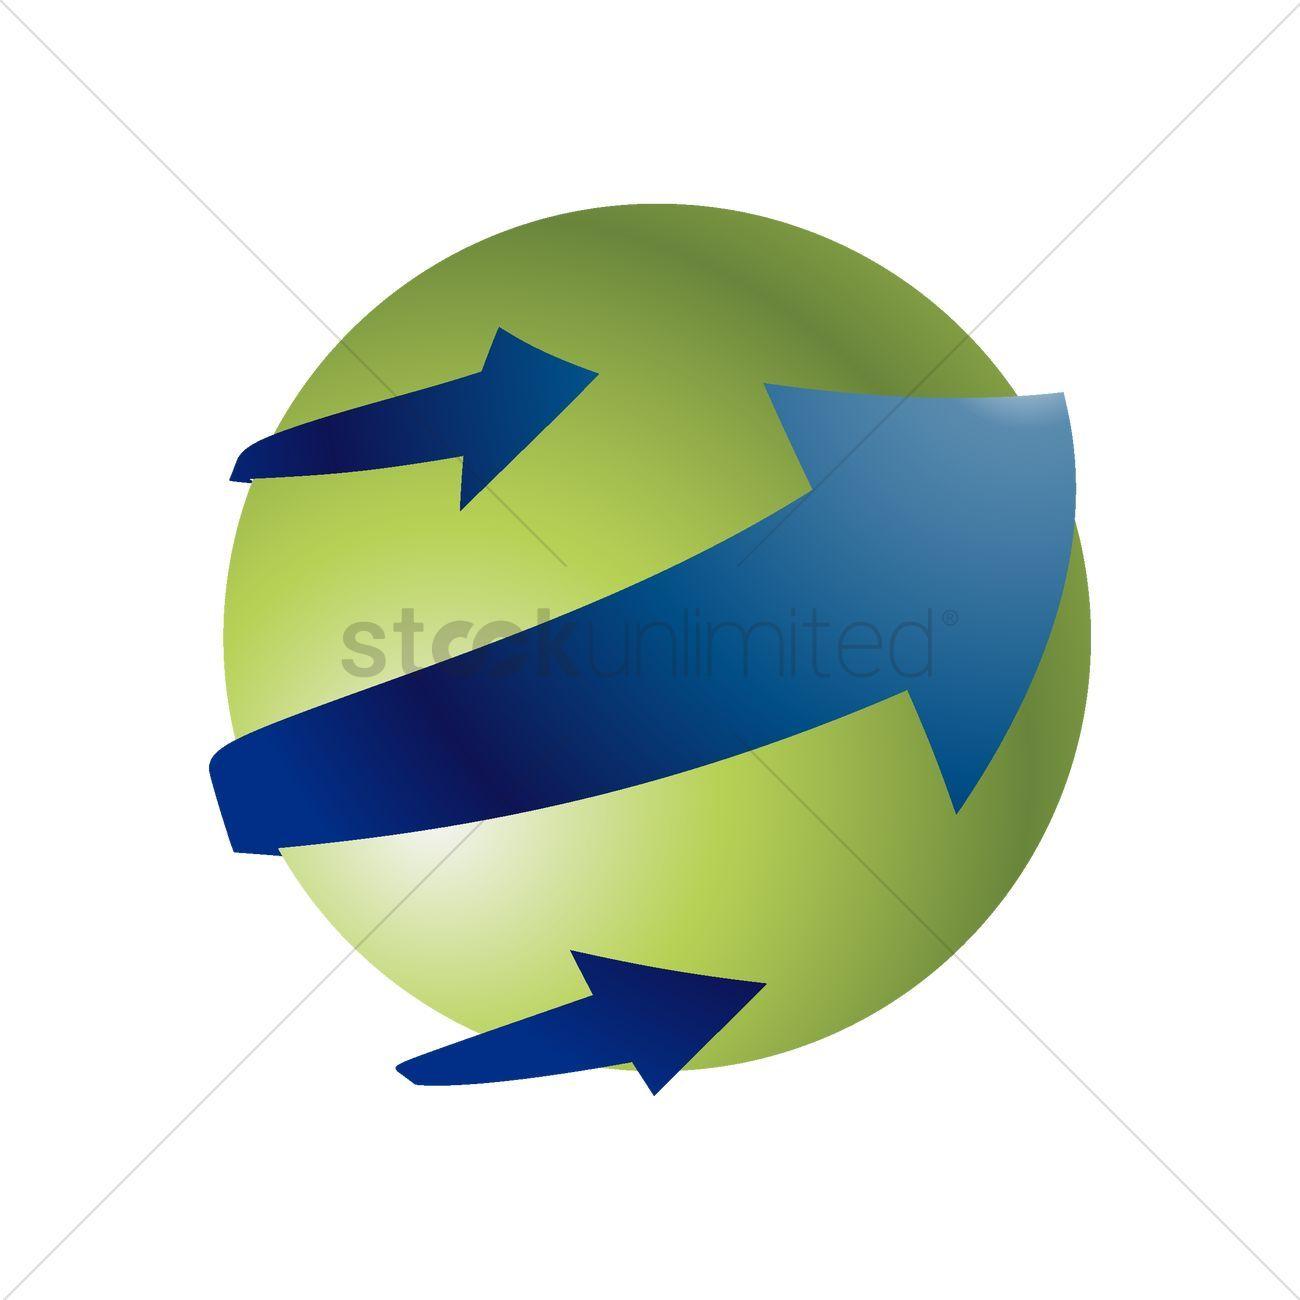 Spherical Logo - Spherical logo element design Vector Image - 2001905 | StockUnlimited